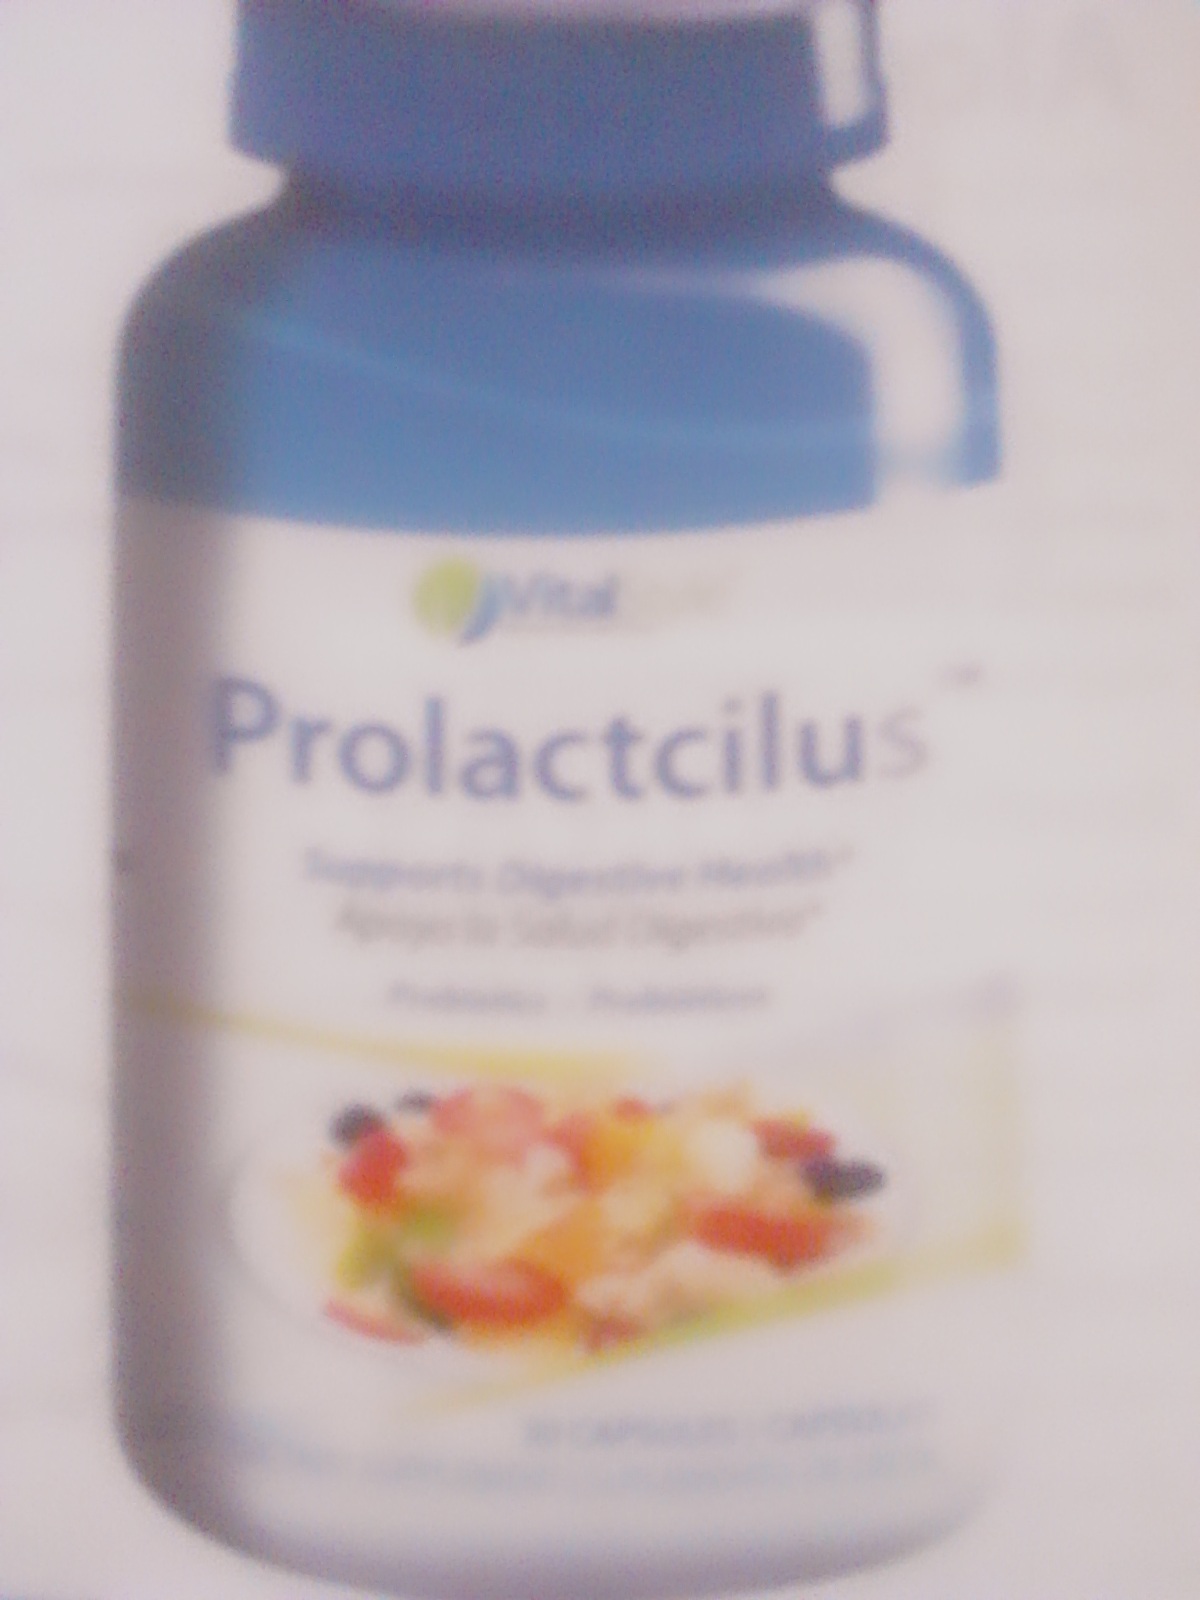 Prolactcilus™